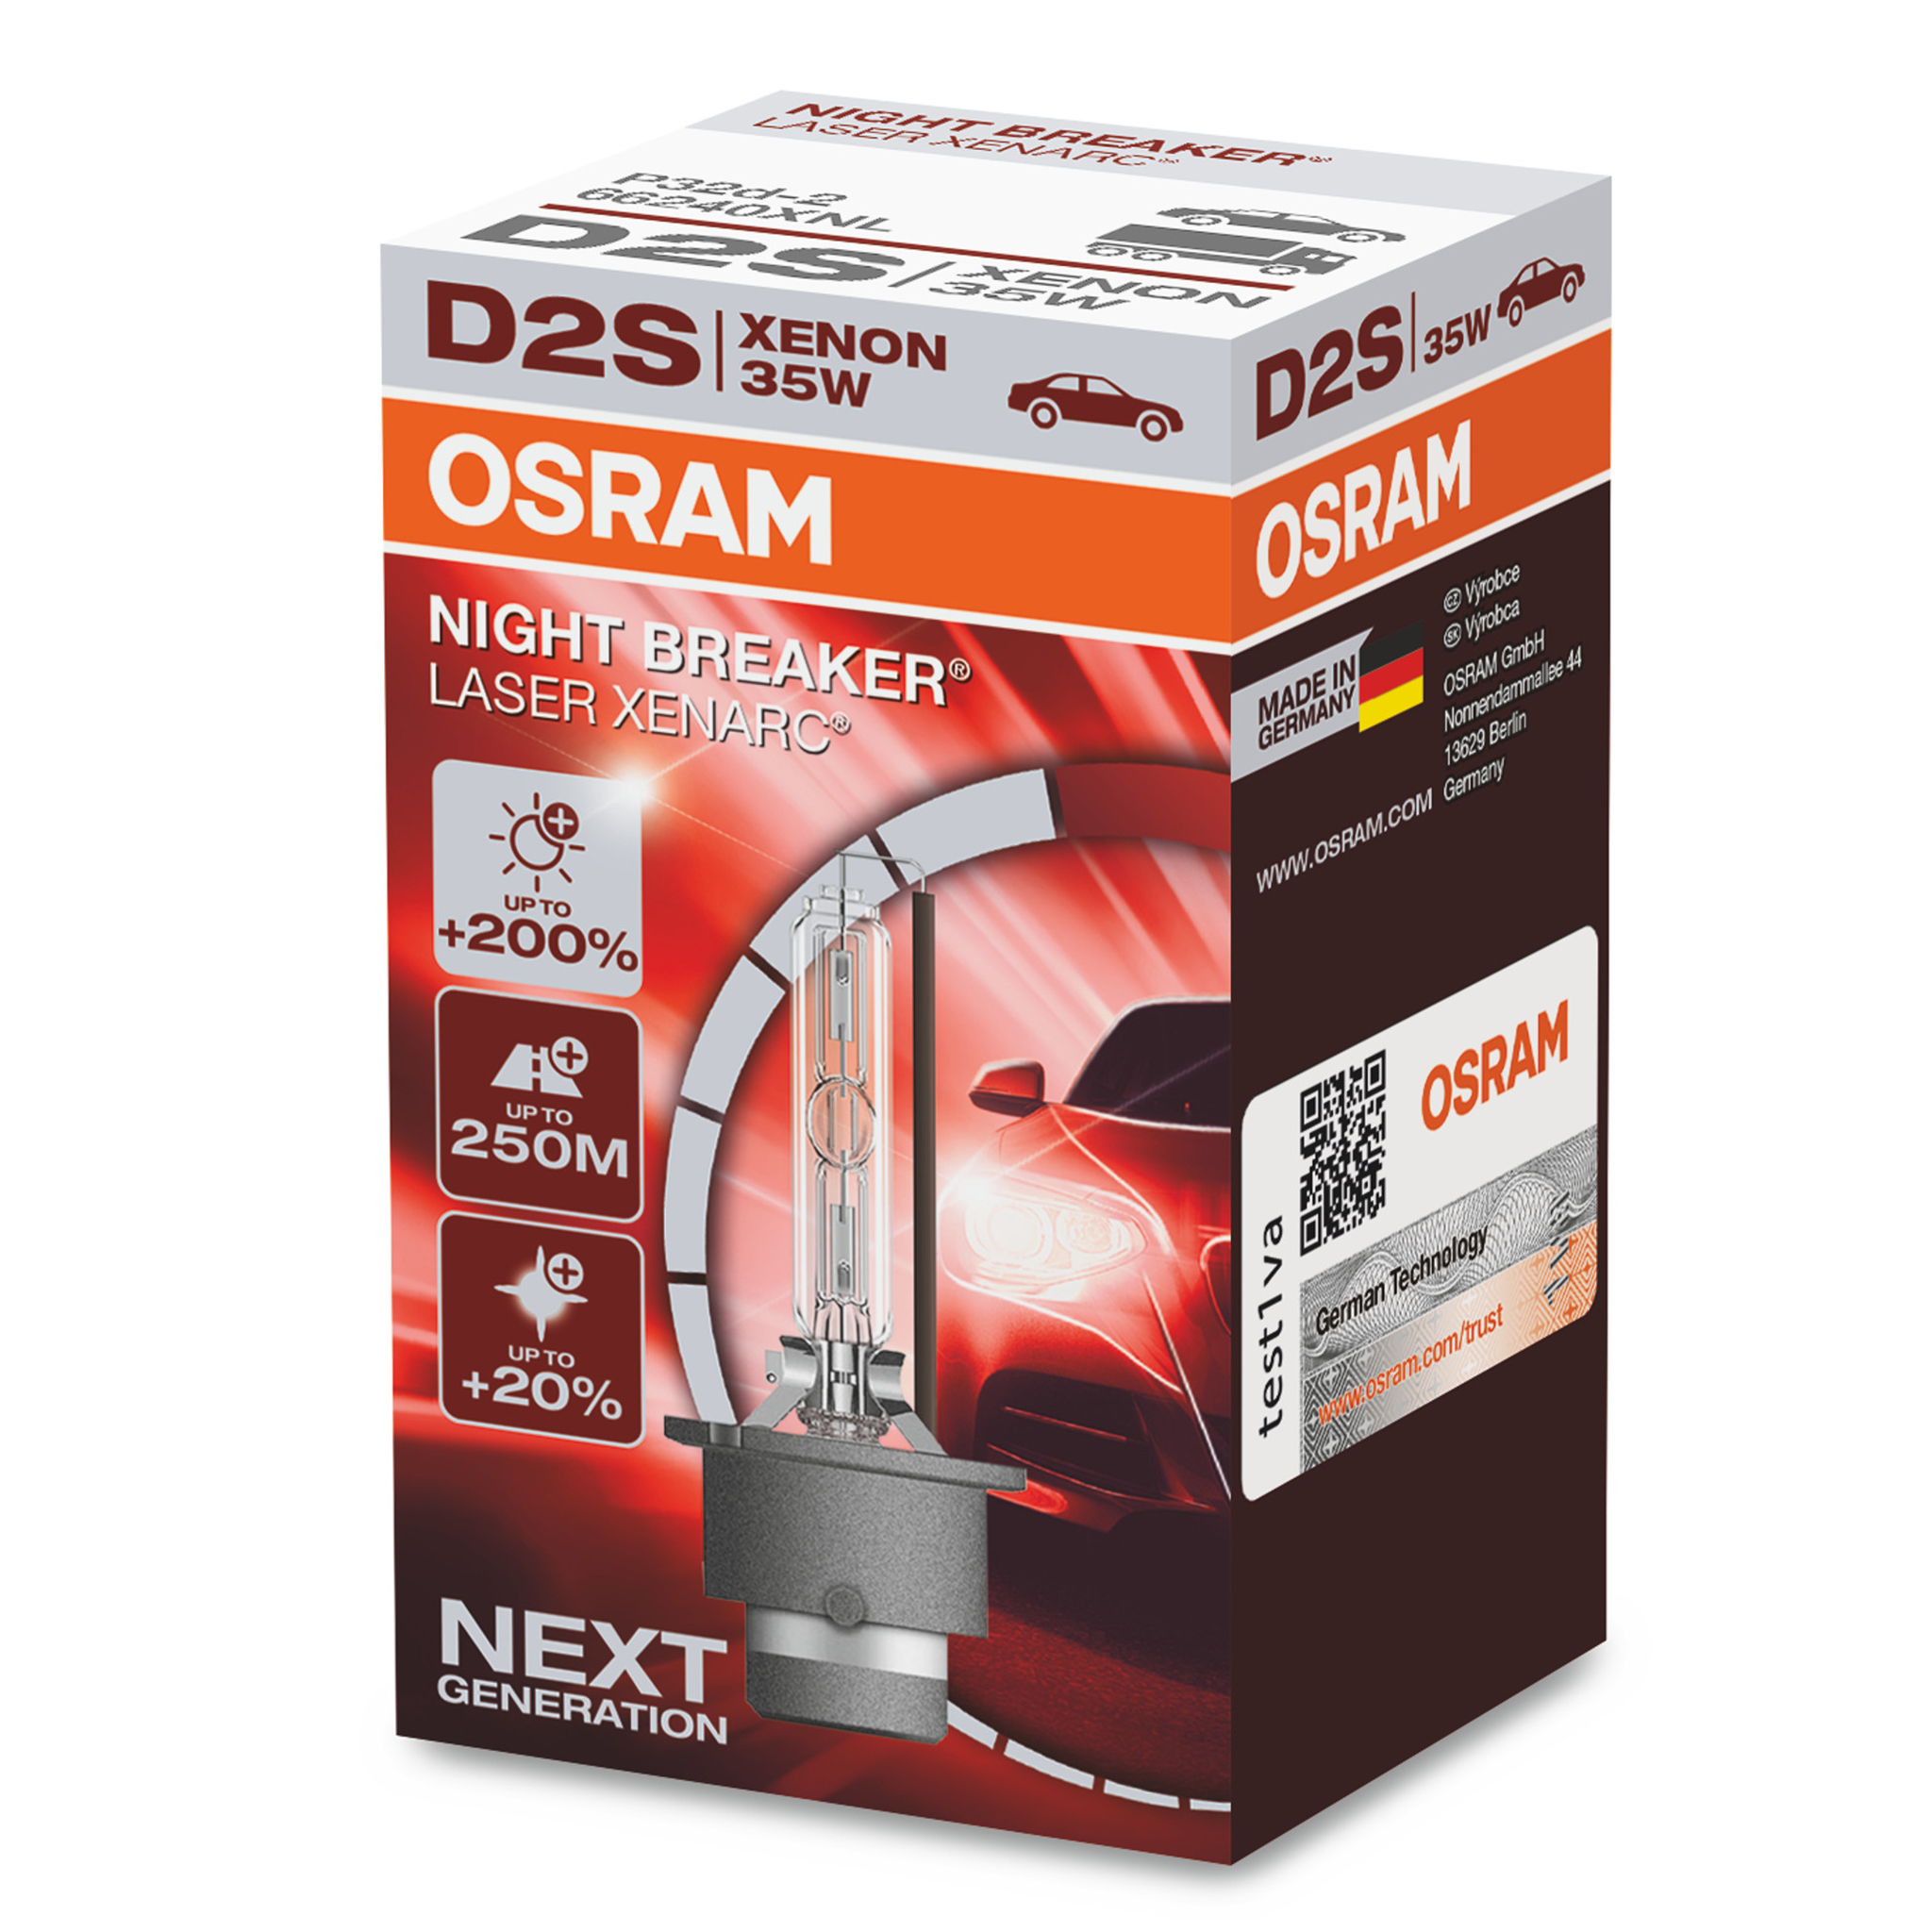 Xenonlampa Osram Xenarc Night Breaker Laser +200%, D2S